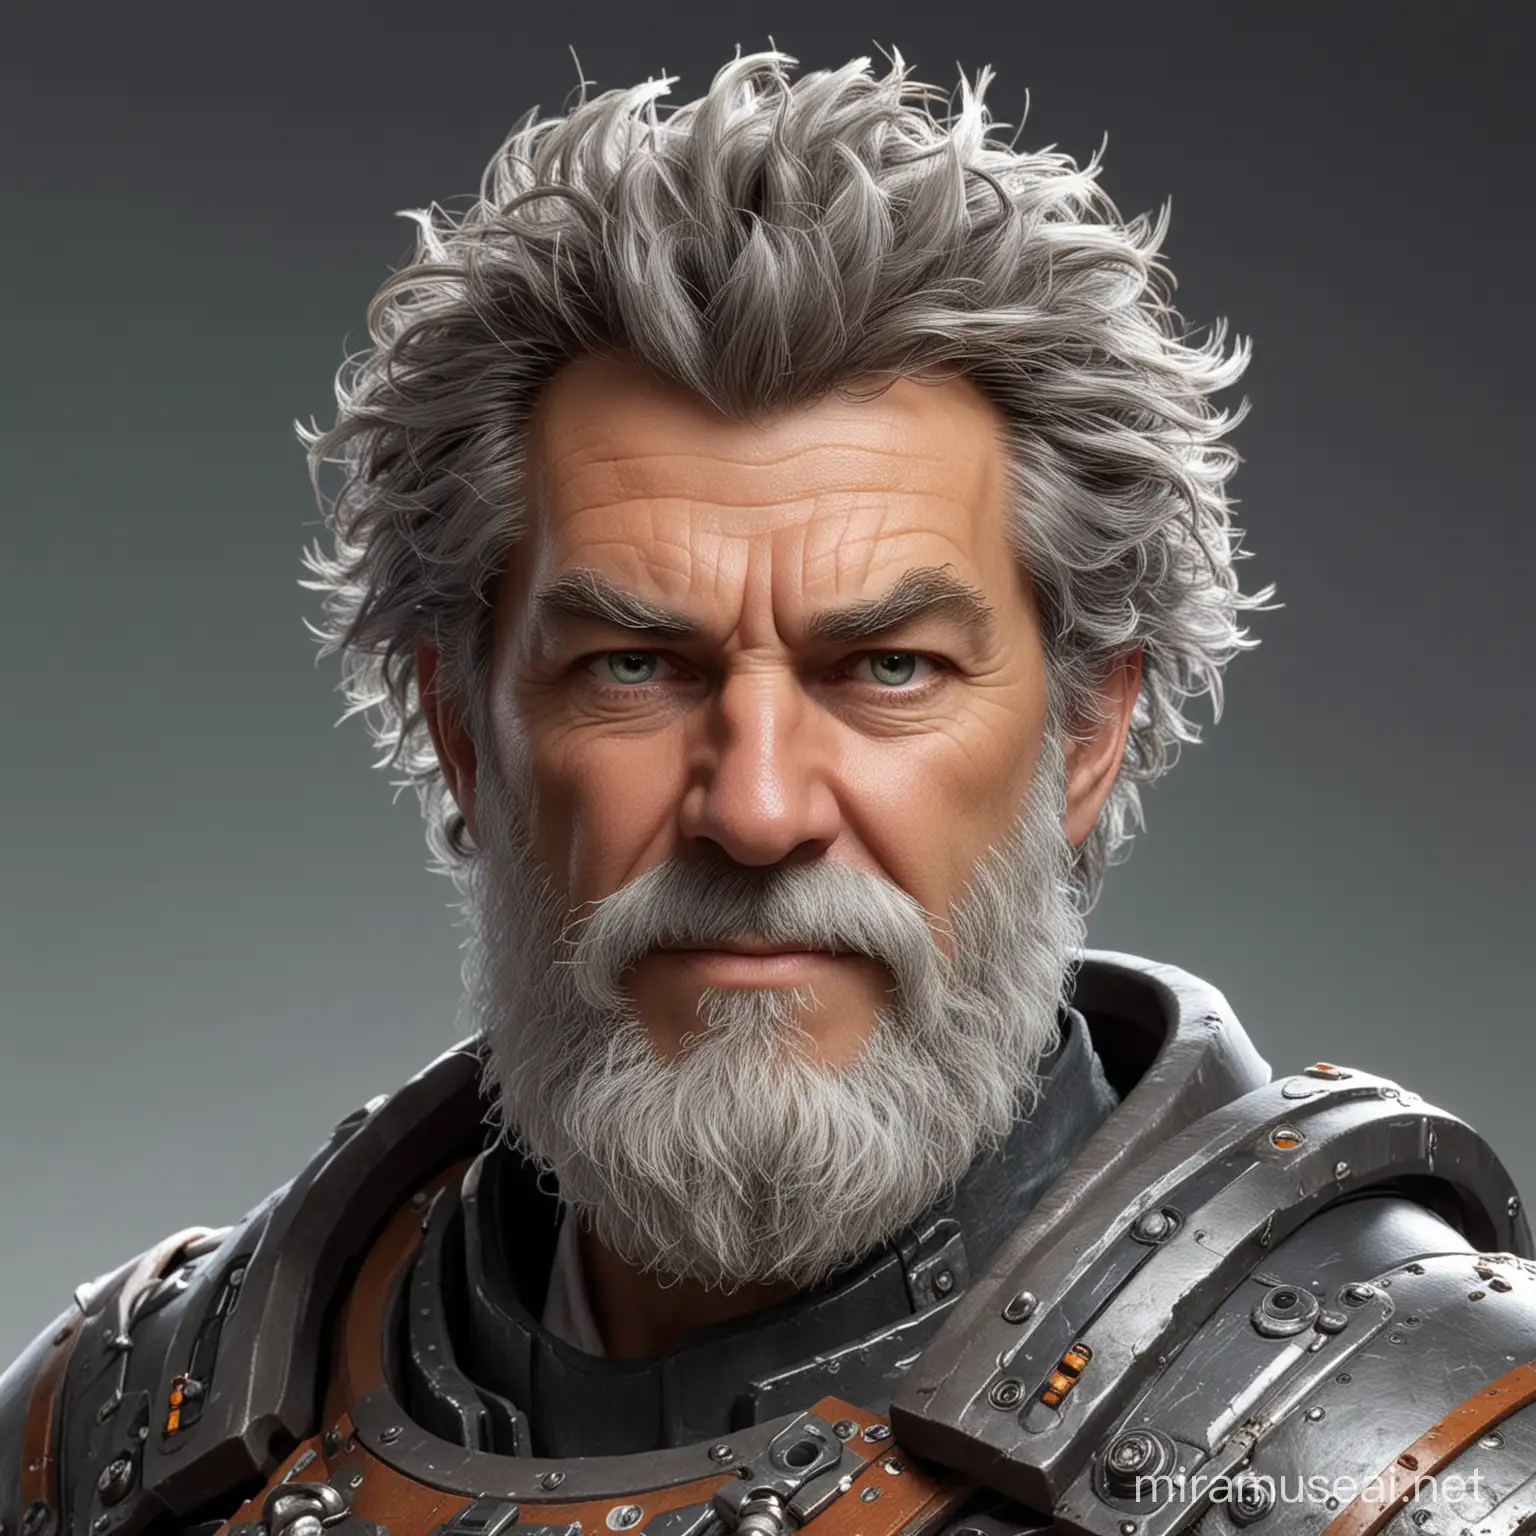 Elderly DND Artificer in Heavy Tech Armor with Gray Hair and Bushy Beard